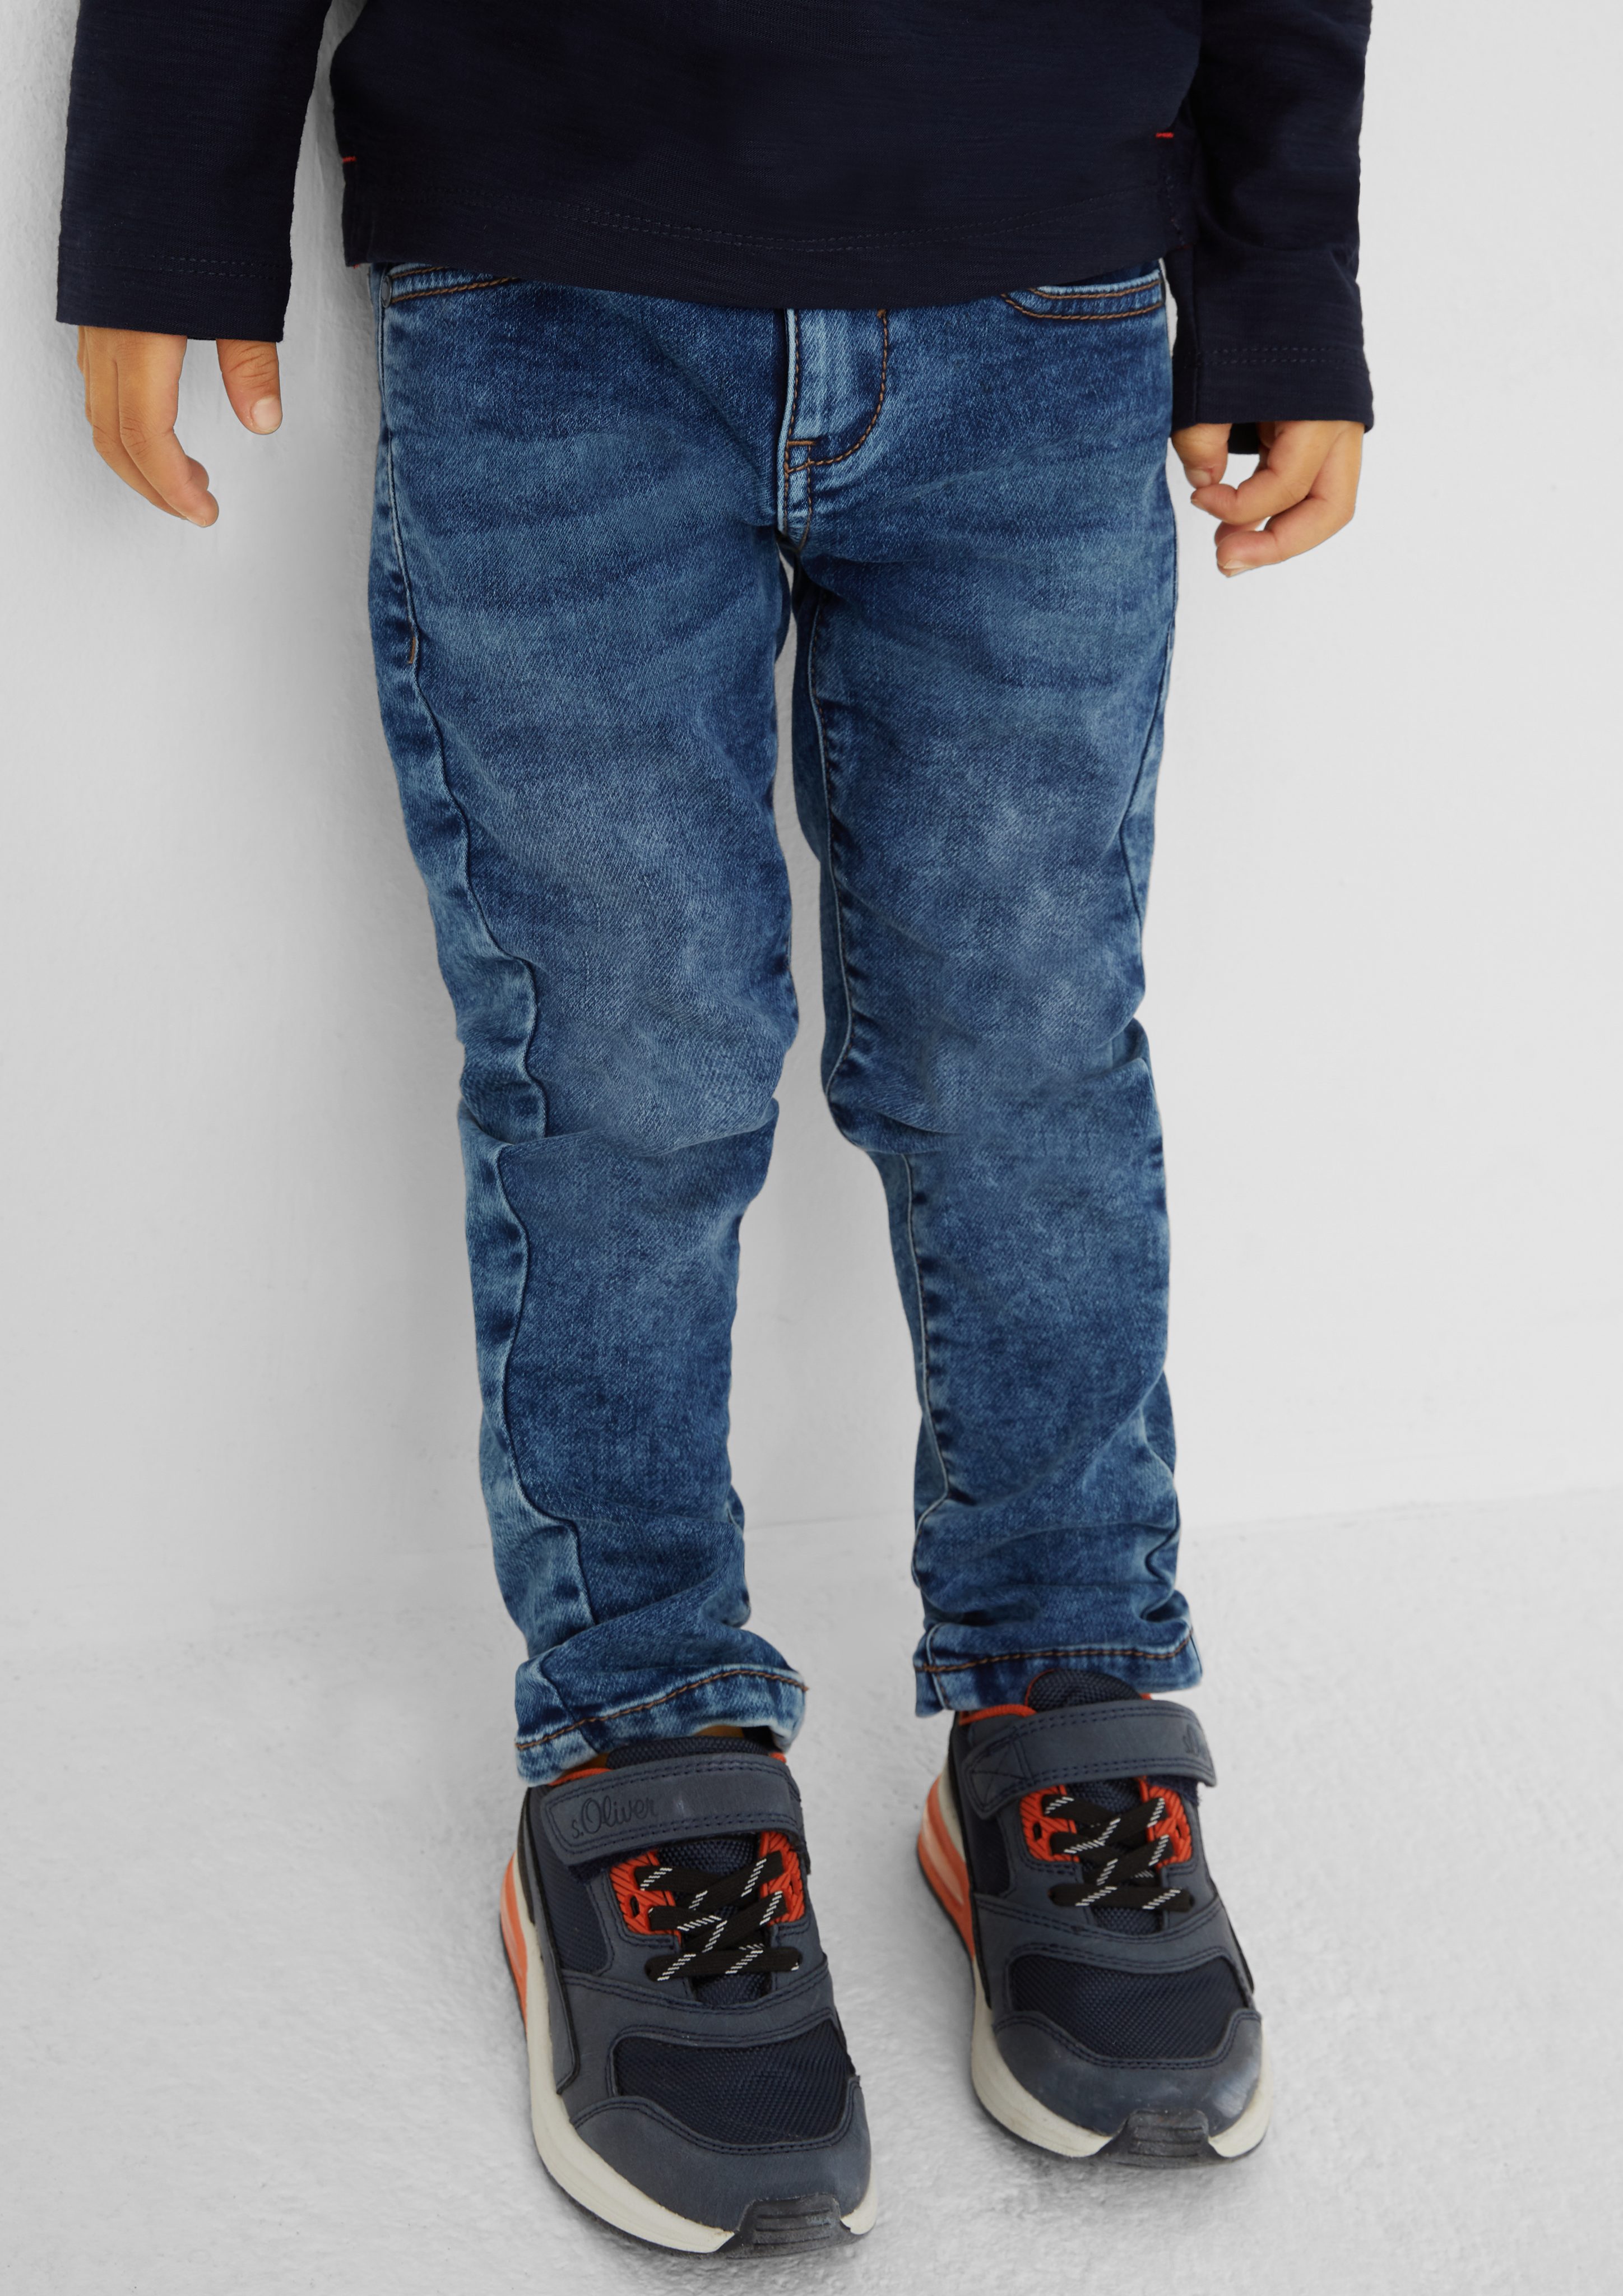 Jeans Fit Slim s.Oliver Brad / 5-Pocket-Jeans / / Waschung Leg Slim Rise Mid